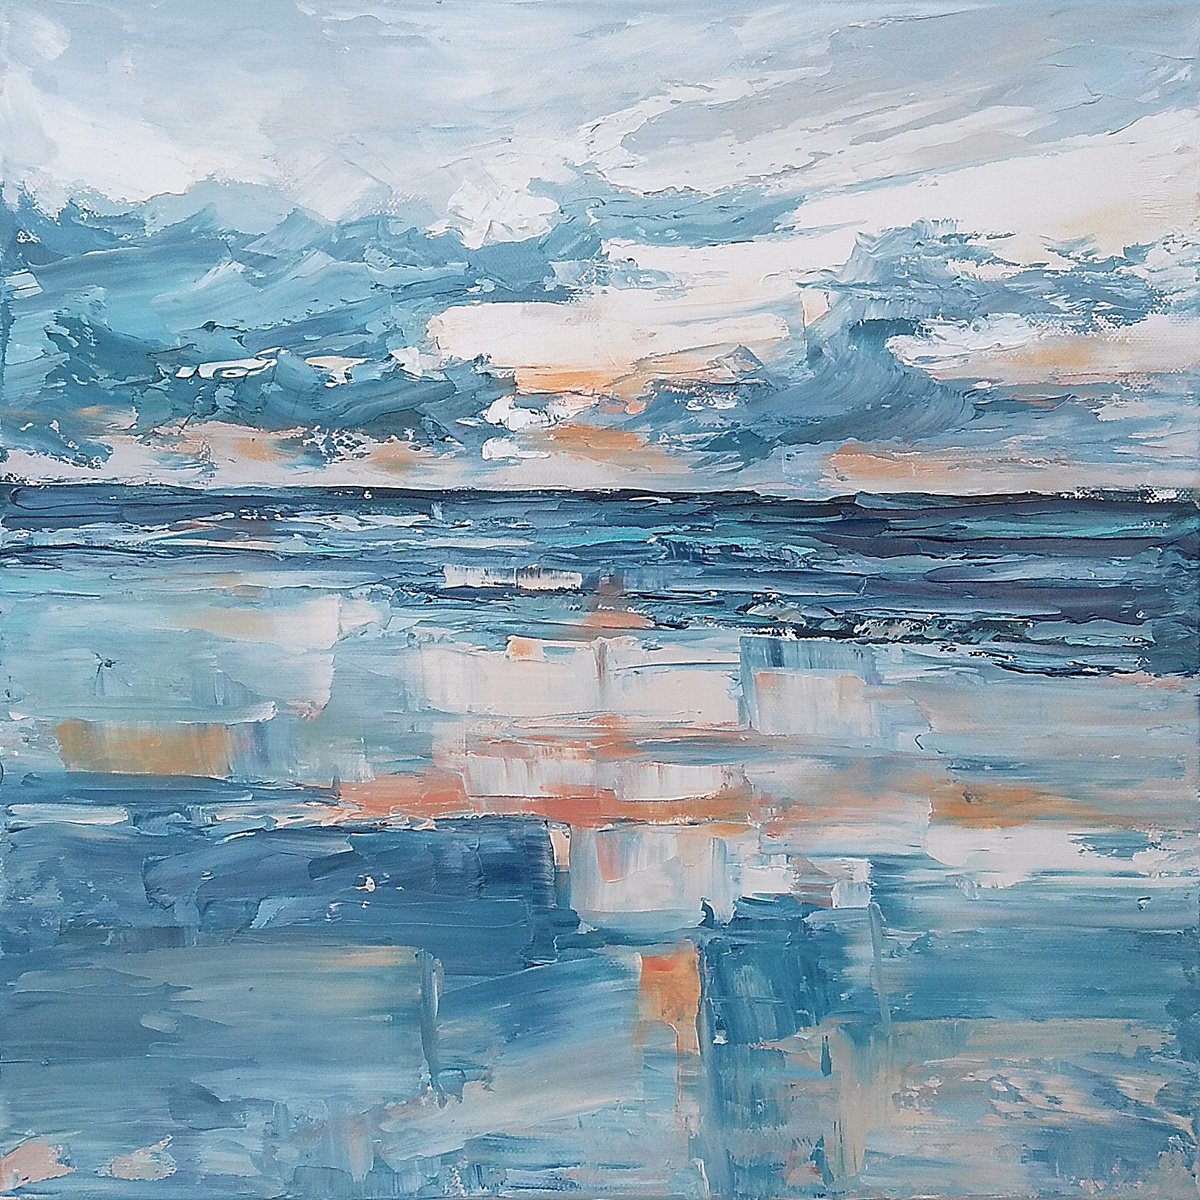 SHALLOWS, 40x40cm, reflecting skies seascape by Emilia Milcheva